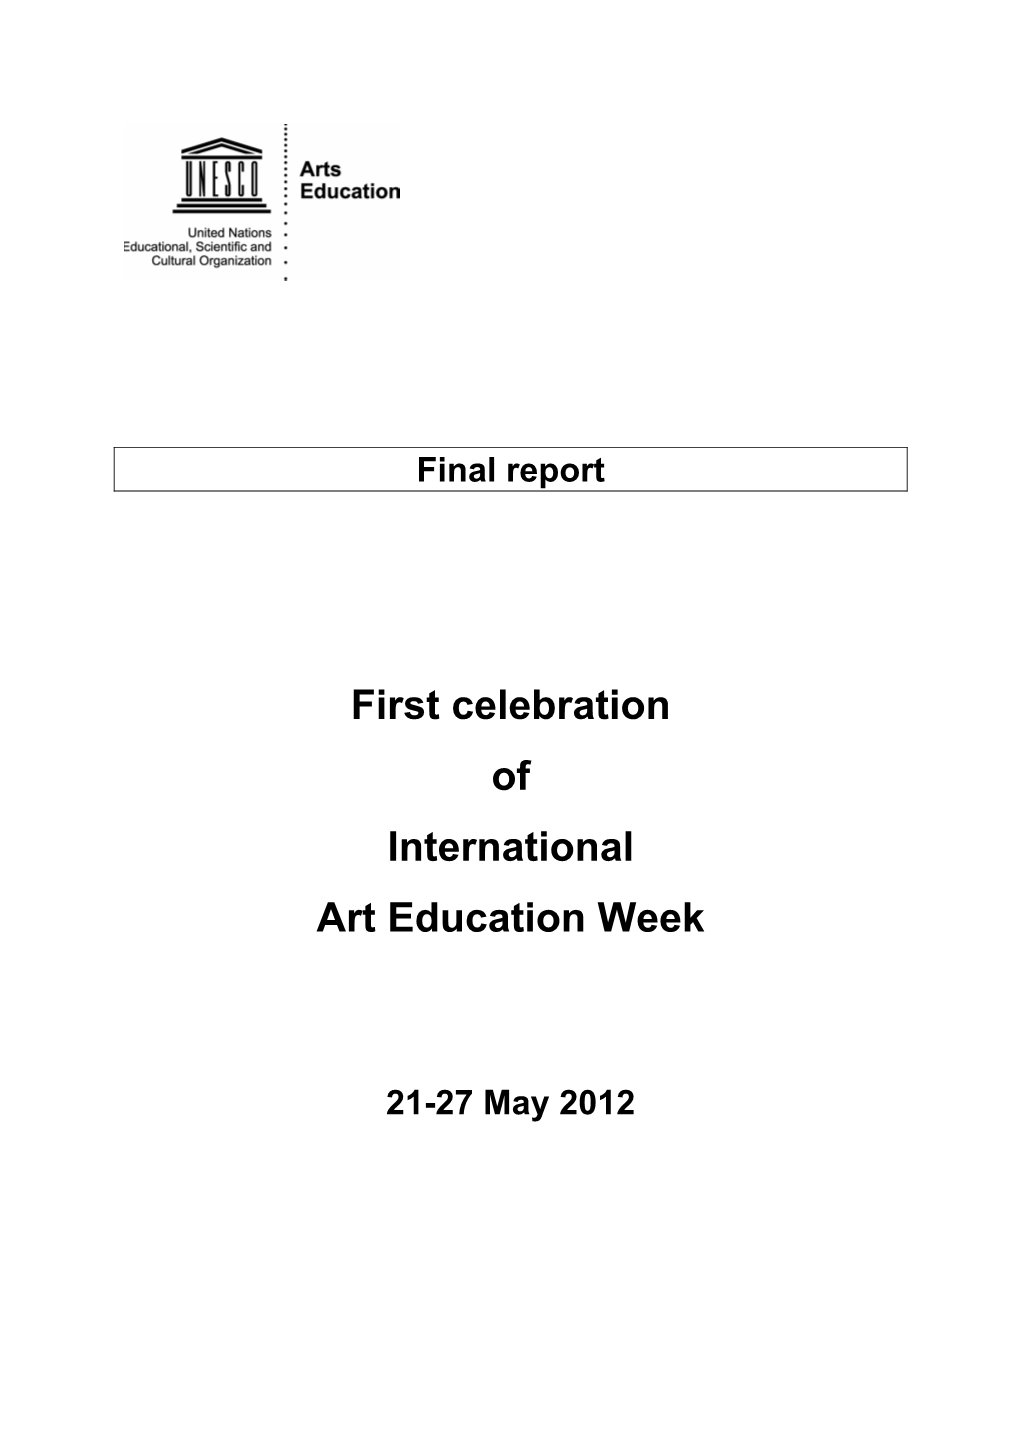 First Celebration of International Art Education Week